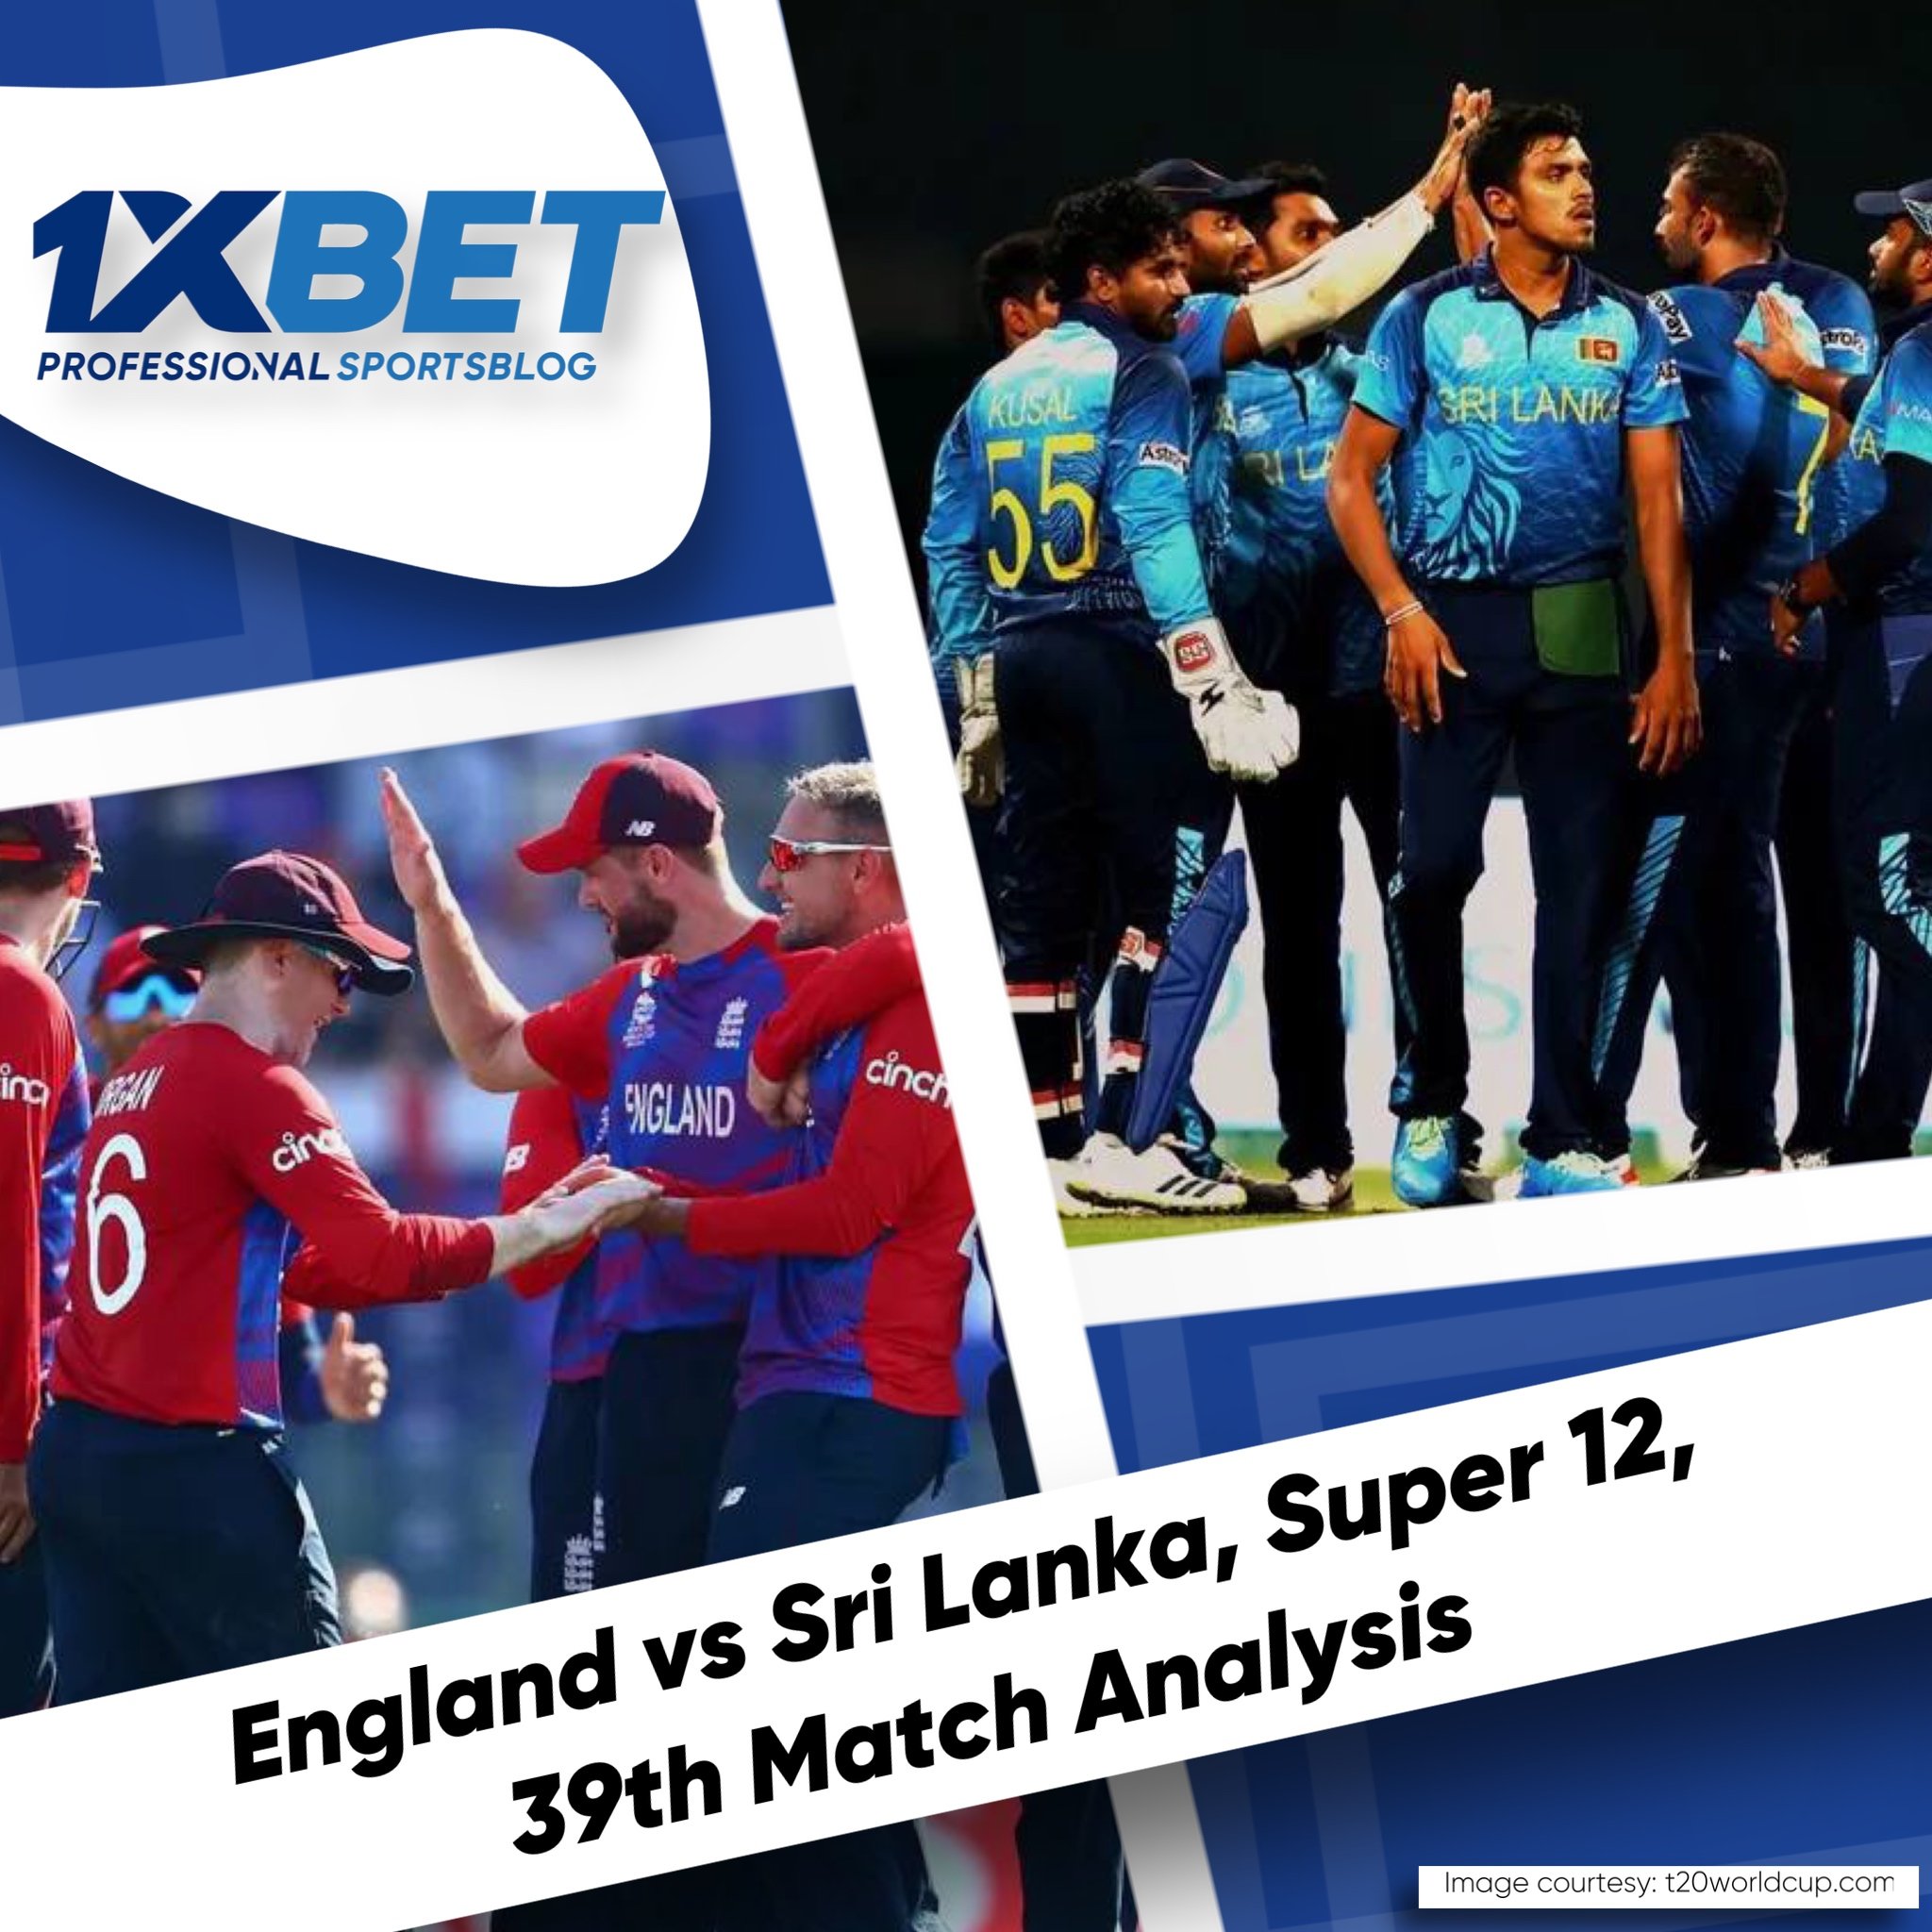 England vs Sri Lanka, Super 12, 39th Match Analysis